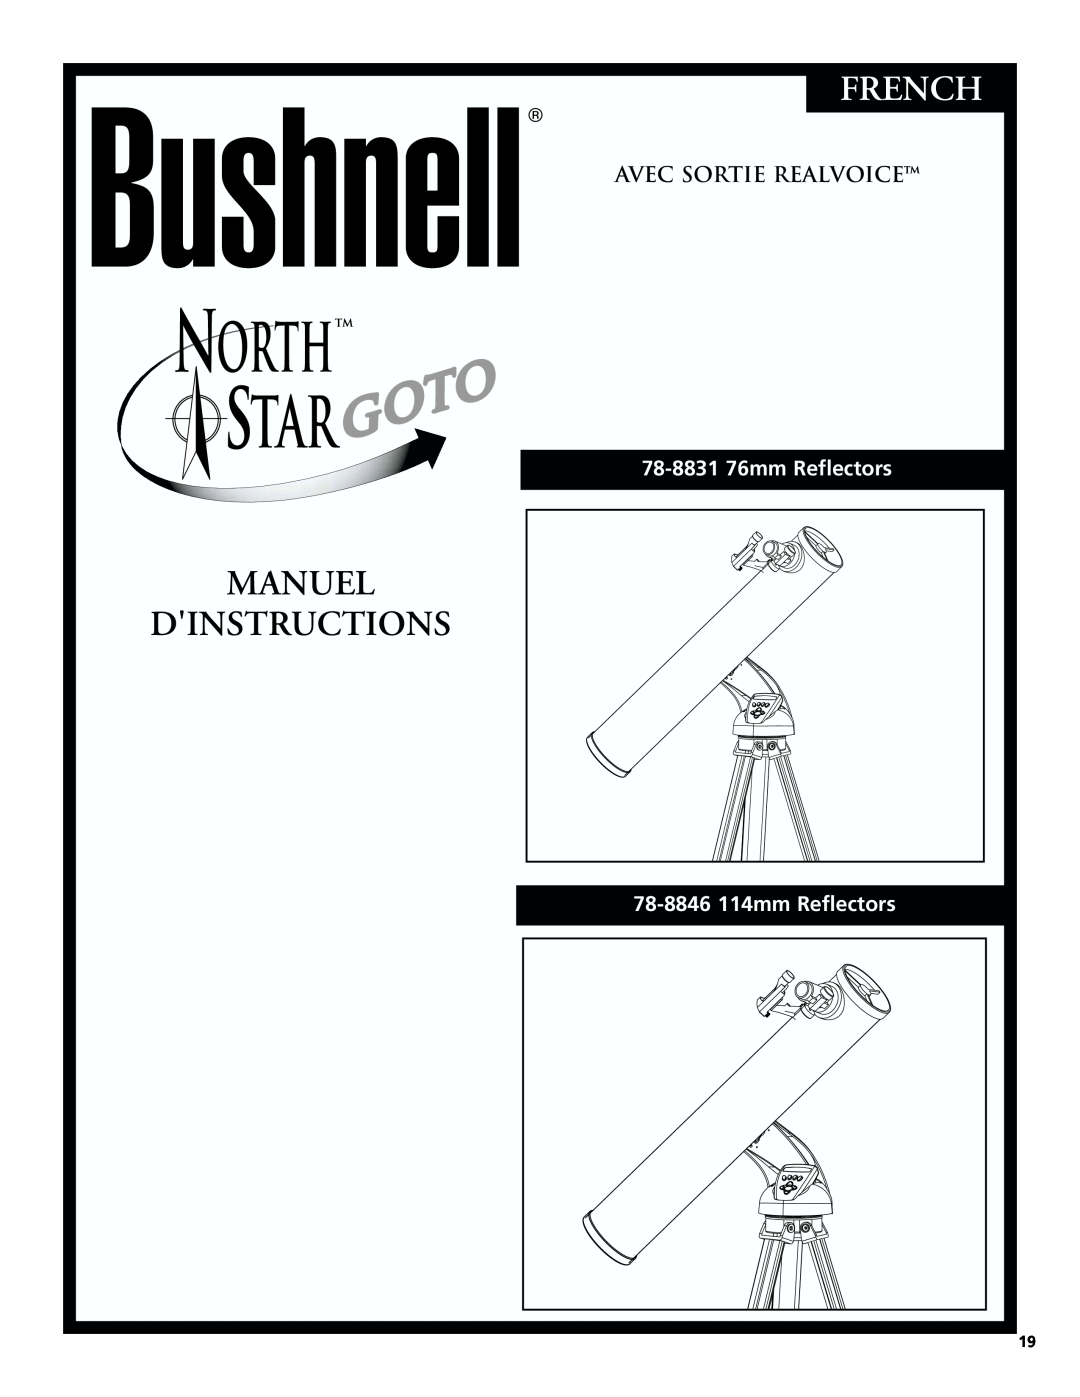 Bushnell 78-8831, 78-8846 instruction manual French, Manuel Dinstructions, Avec Sortie Realvoice, 78-883176mm Reflectors 